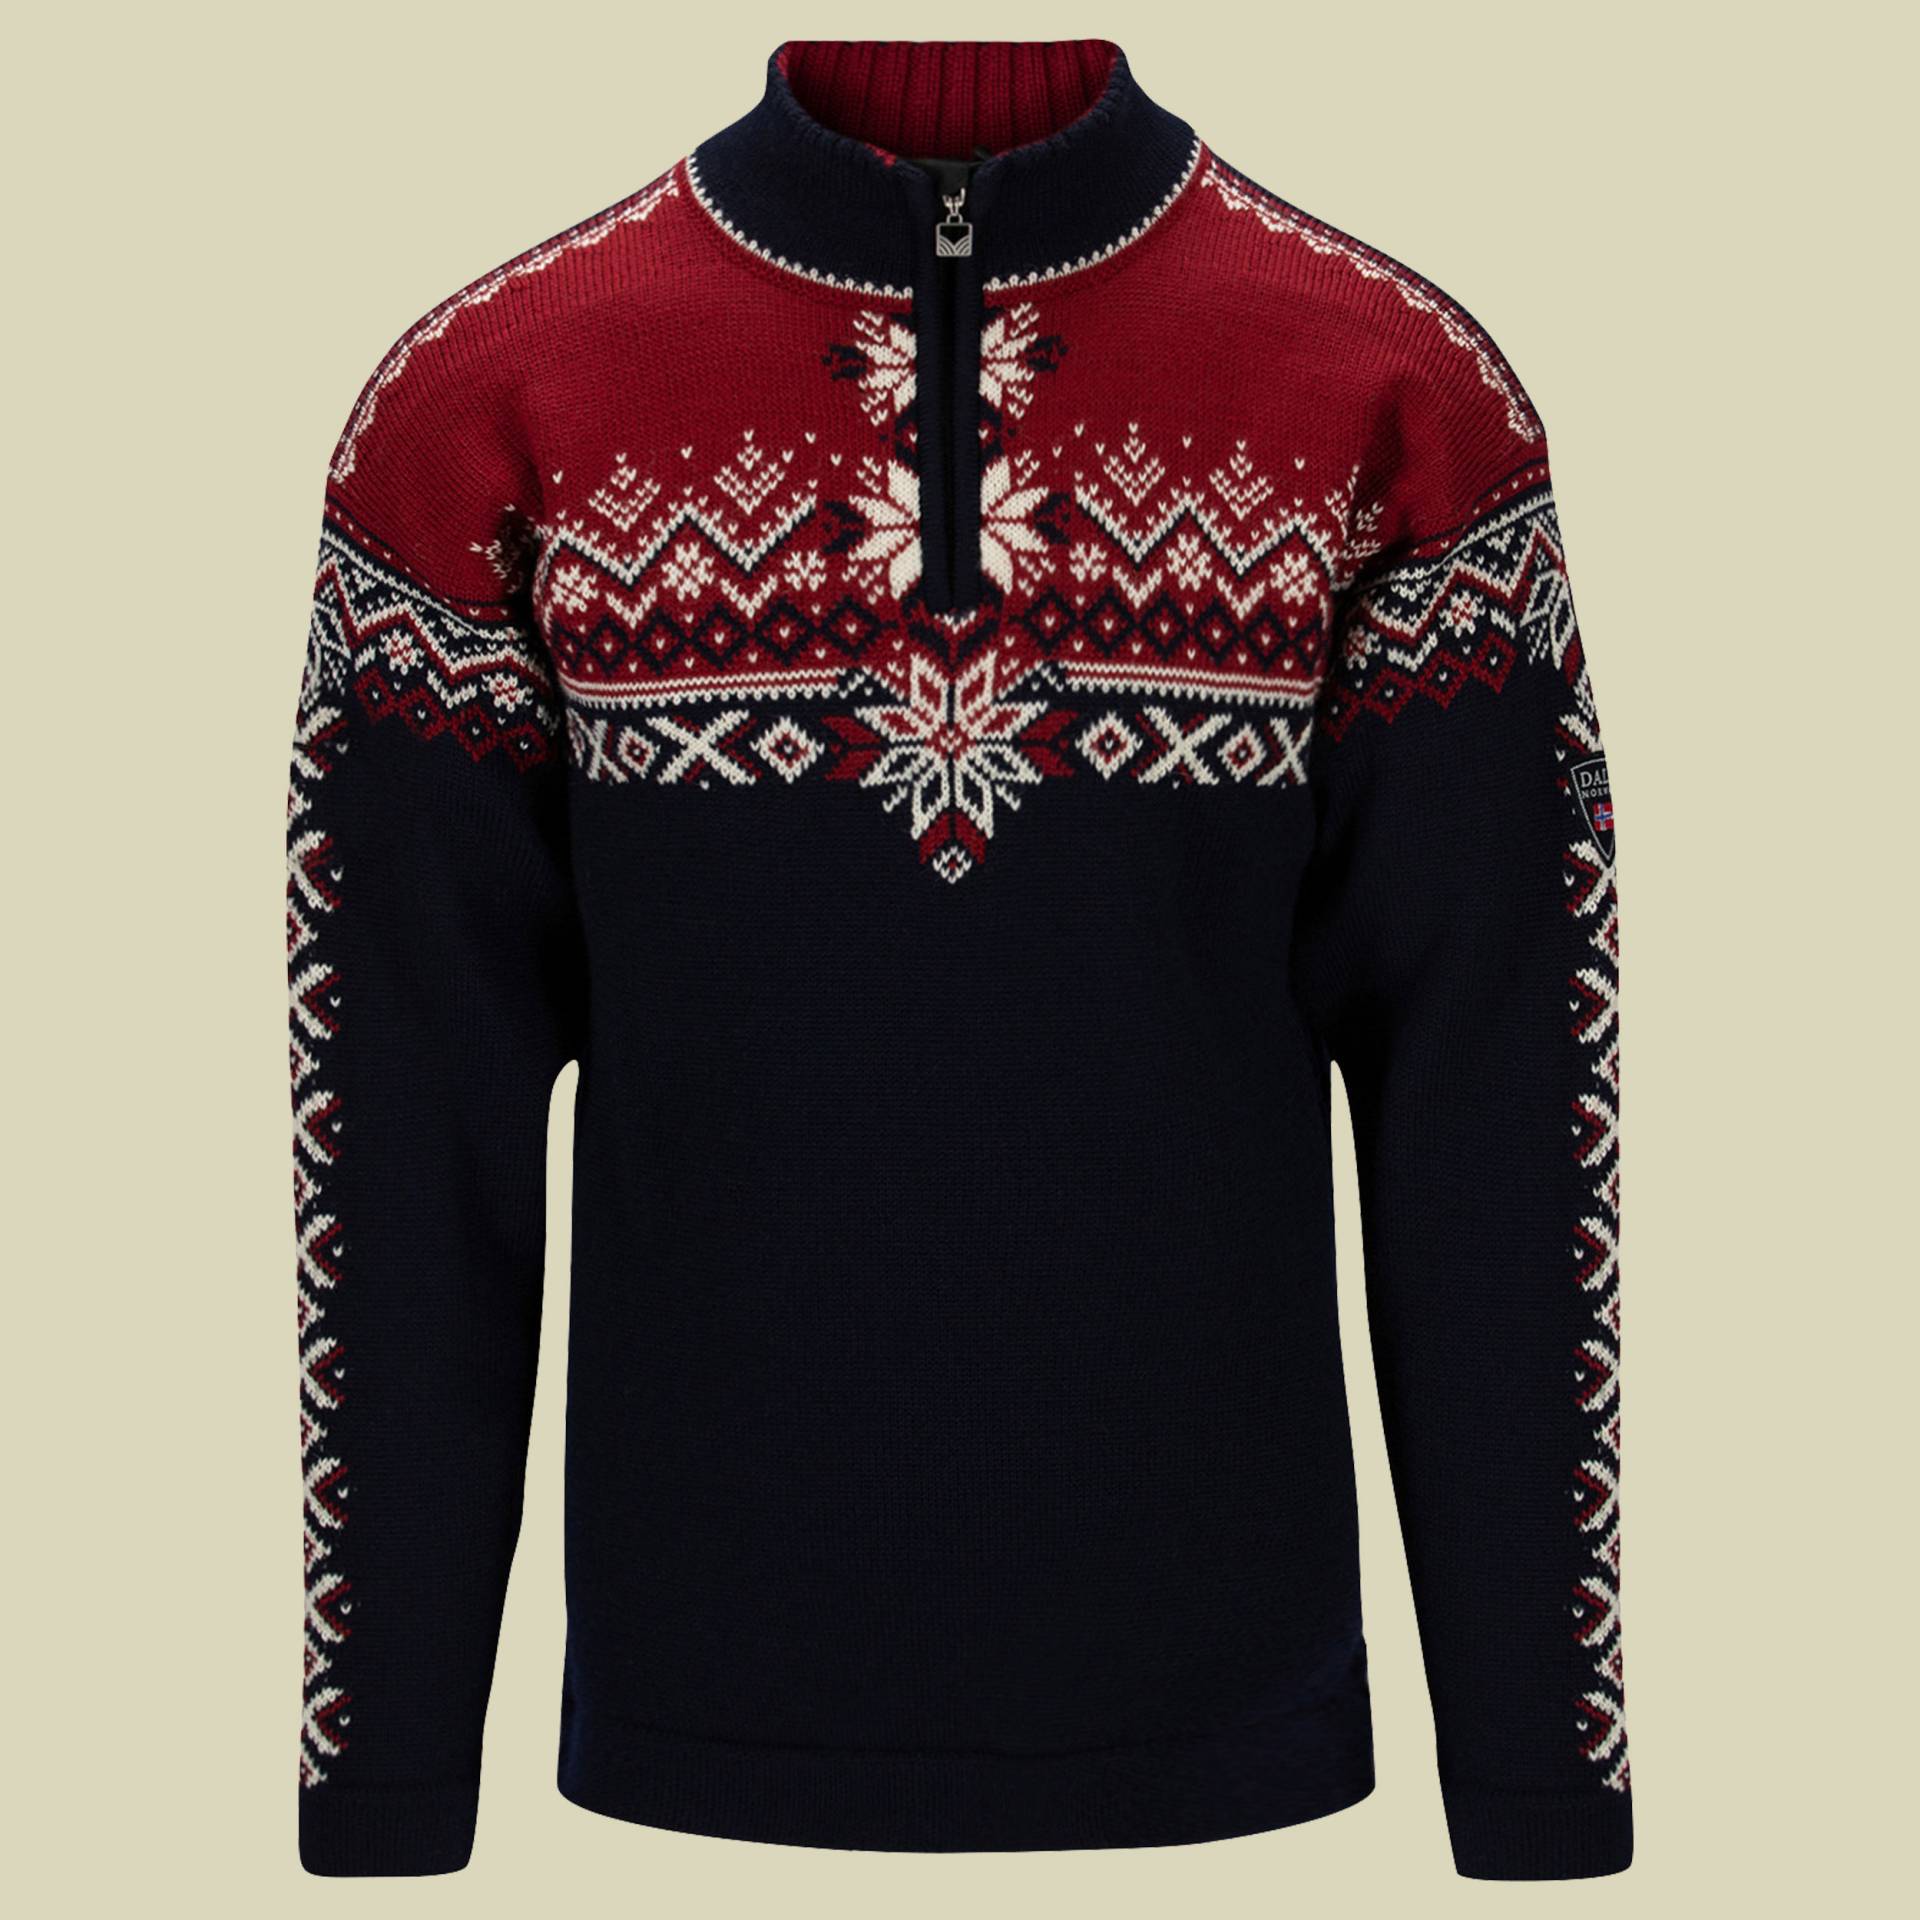 140th Anniversary Sweater Men Größe L  Farbe navy/red rose/off white von Dale of Norway